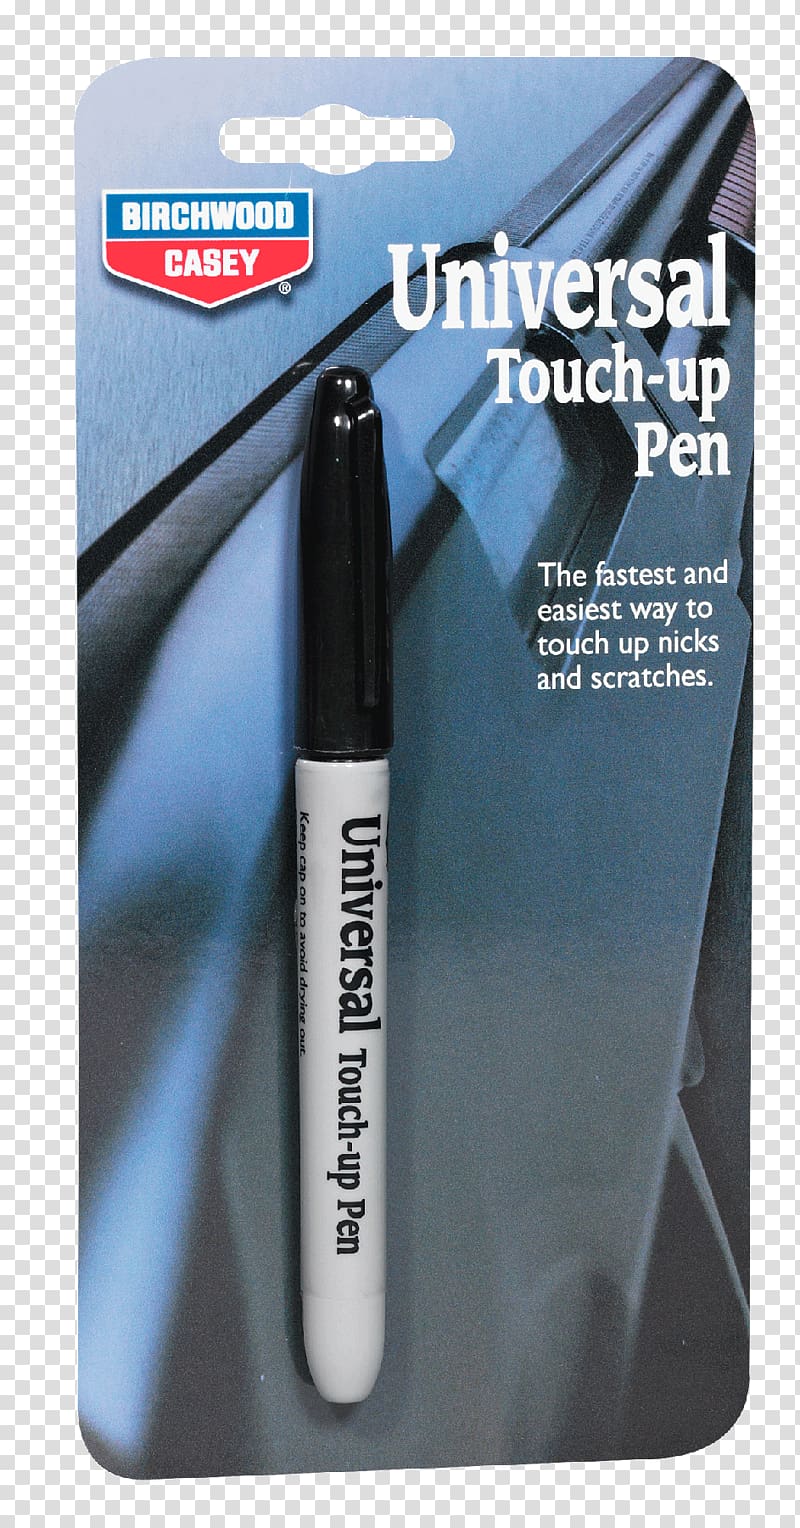 Pens Marker pen Permanent marker Sharpie Tag up, pen scratch transparent background PNG clipart